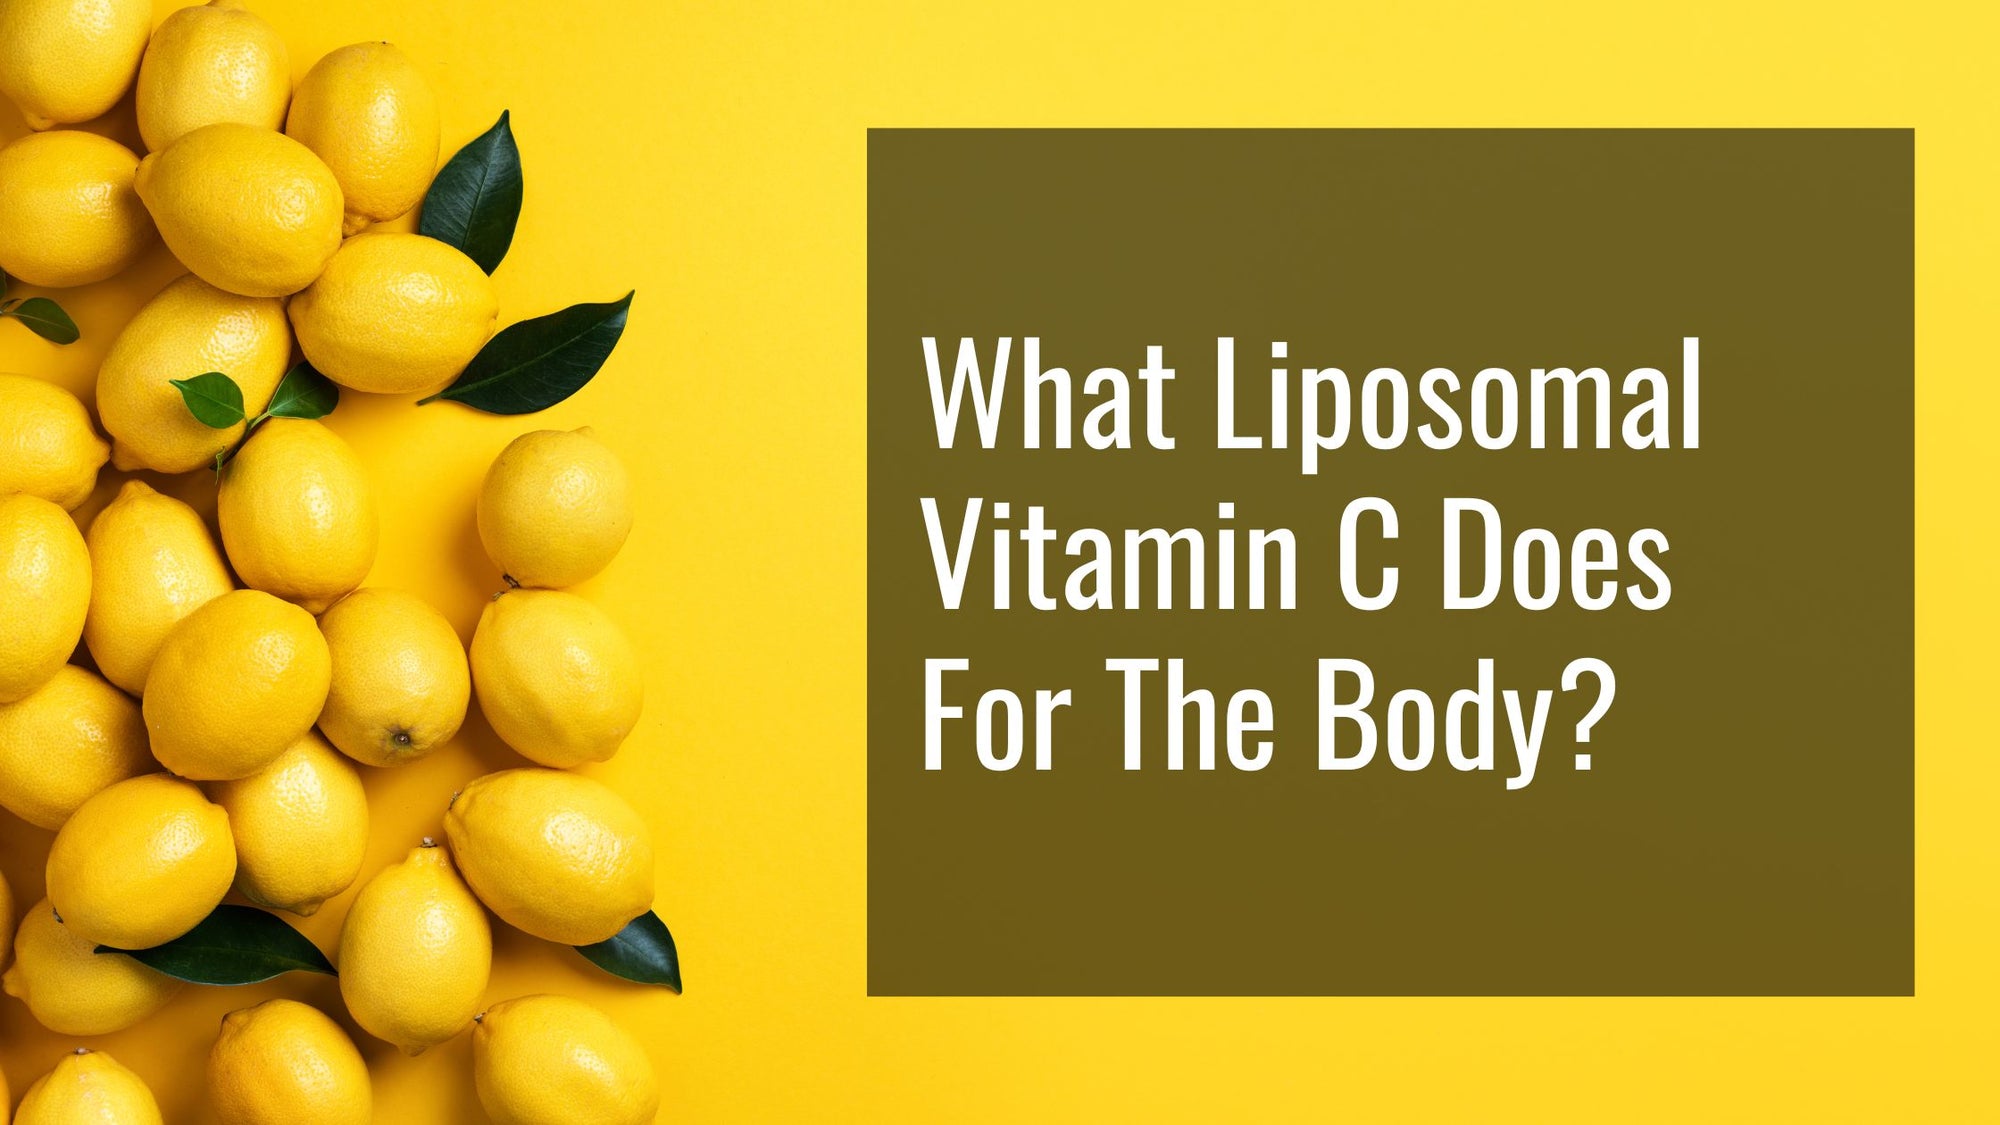 What Does Liposomal Vitamin C Do For The Body?